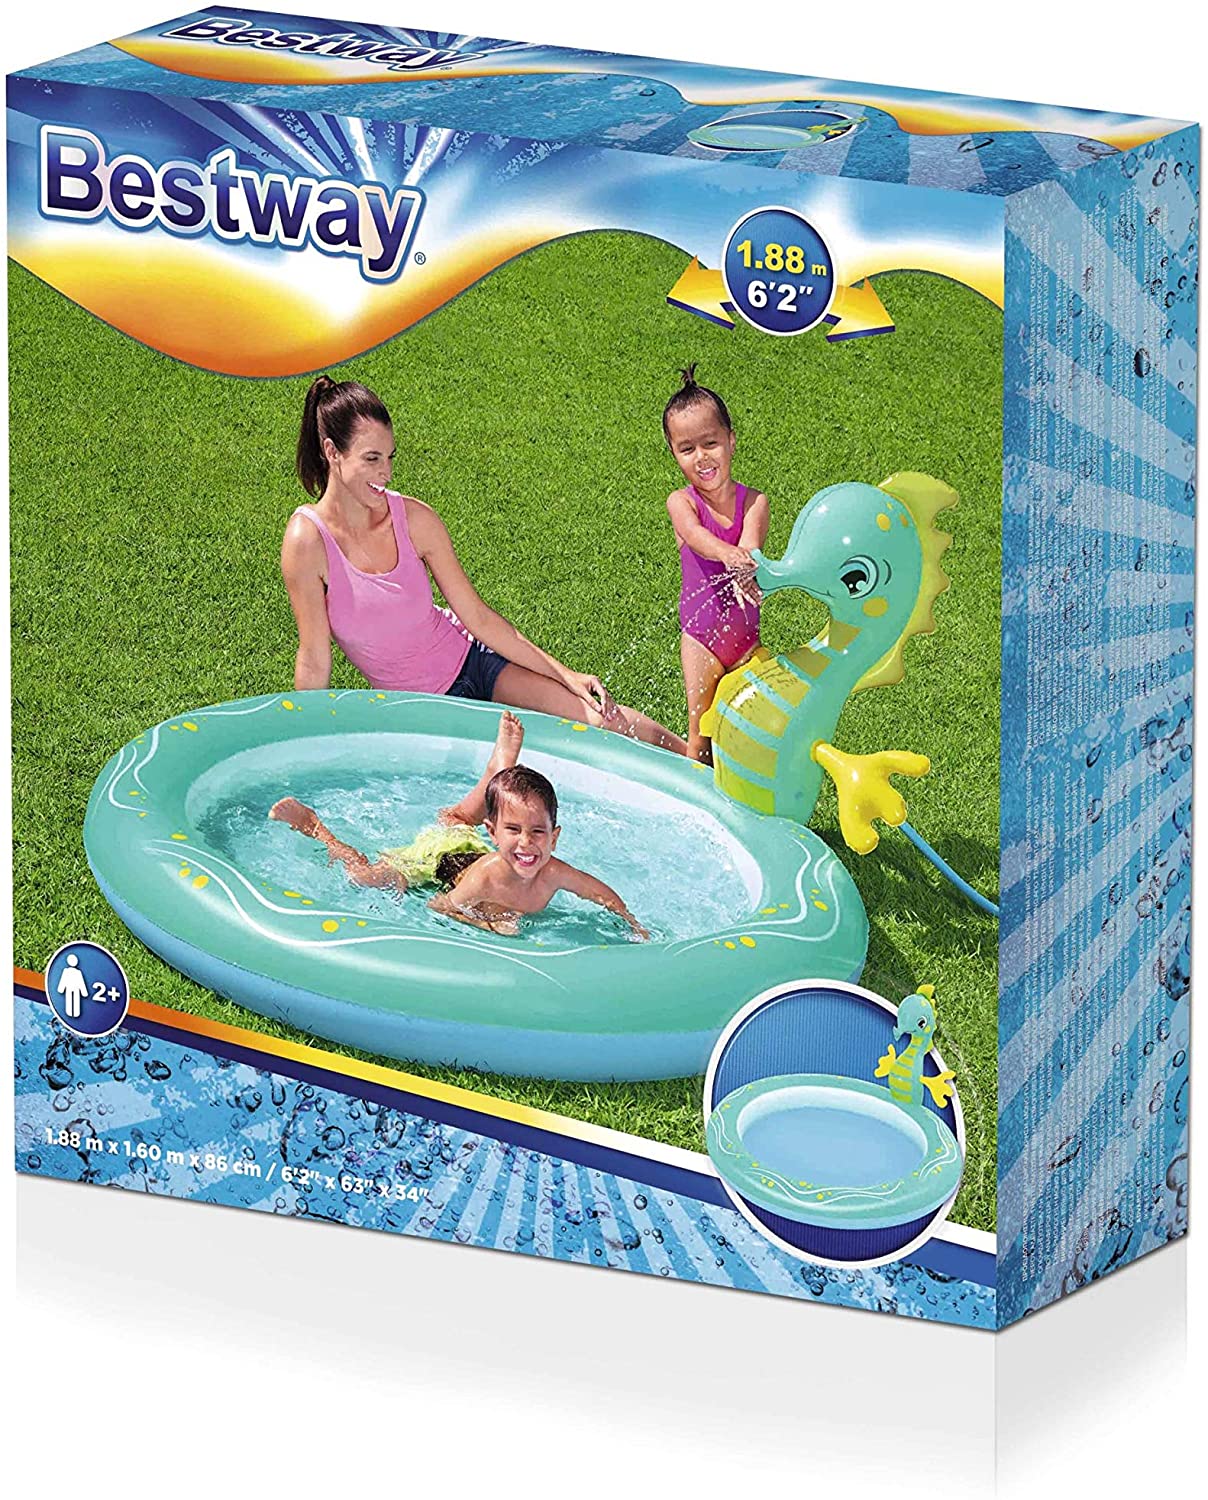 Seahorse Sprinkler Pool (6'2" x 63" x 34"/1.88m x 1.60m x 86cm)